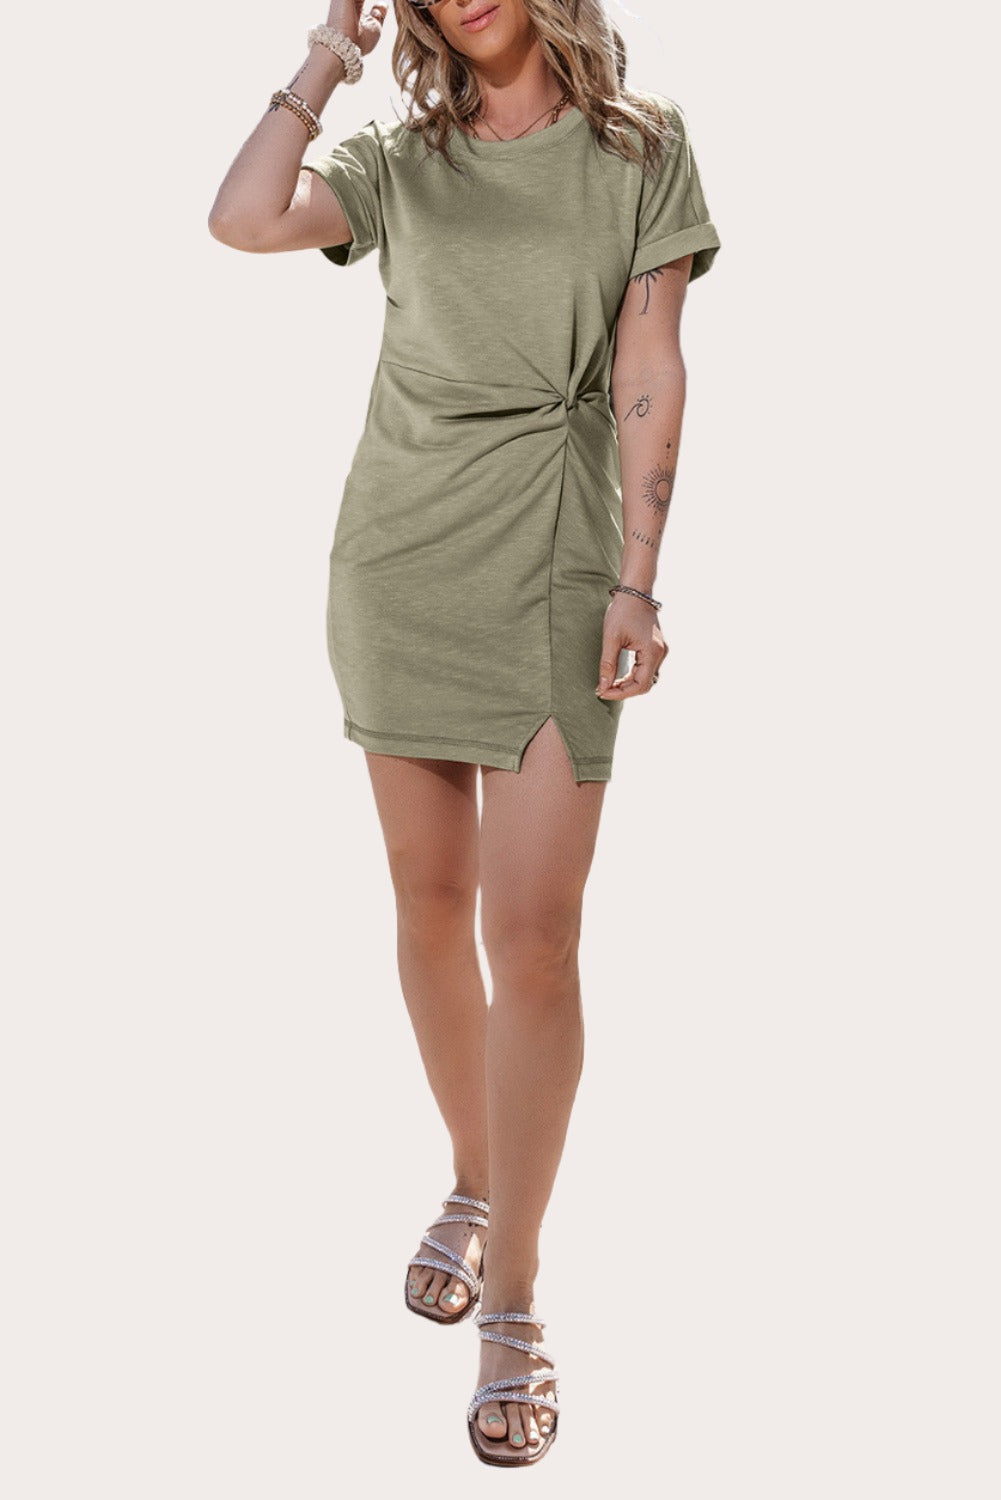 Folded Sleeve Twisted Mini T-Shirt Green Tunic Dress